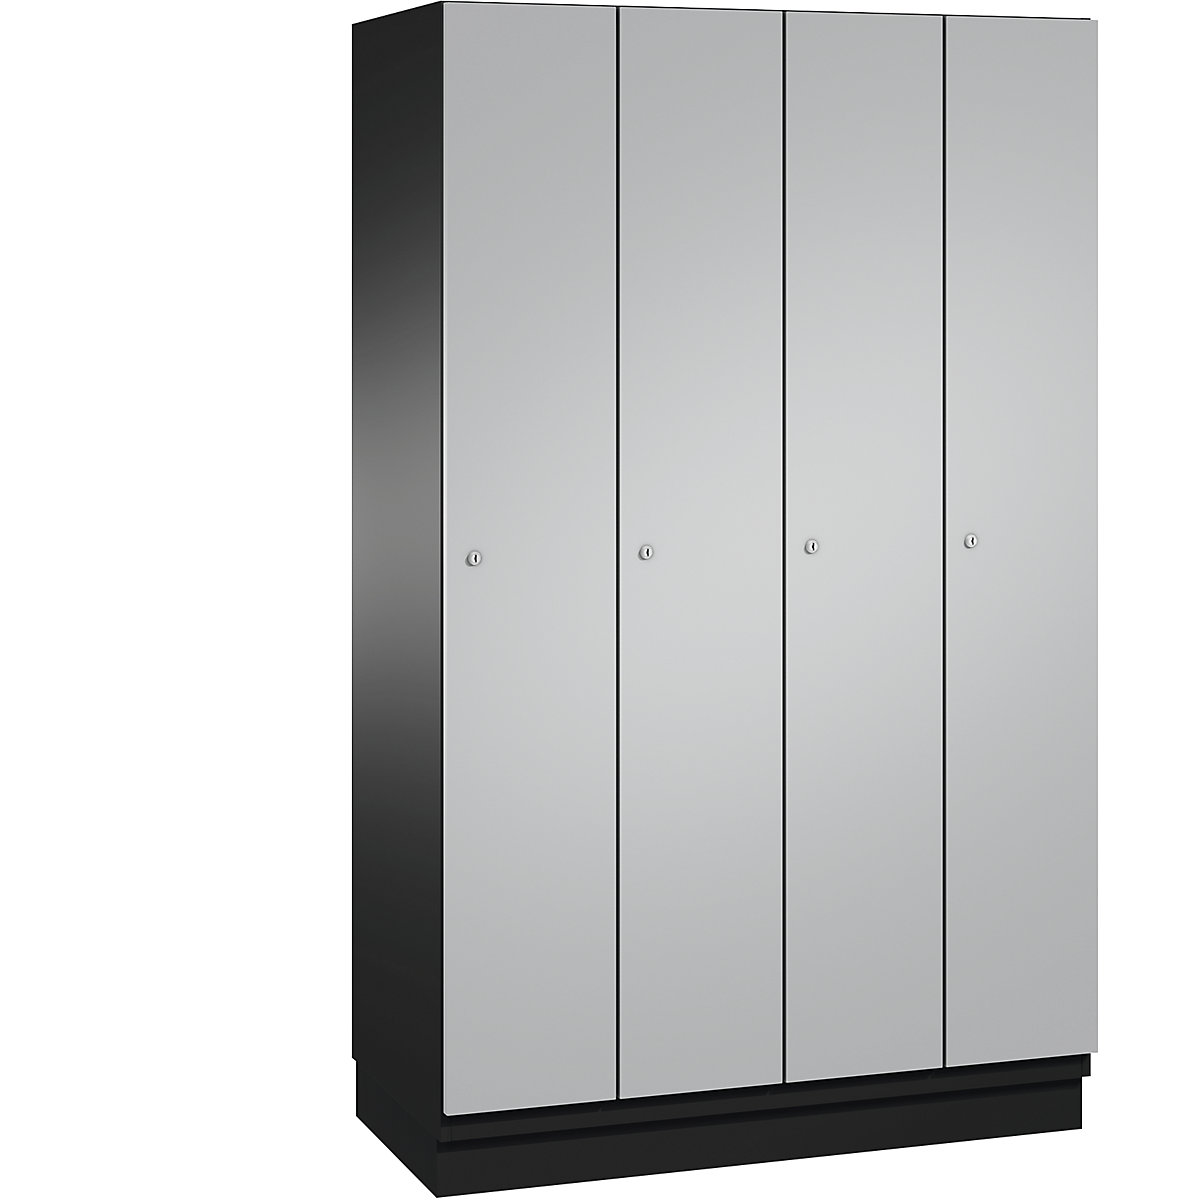 CAMBIO cloakroom locker with sheet steel doors – C+P, 4 compartments, 1200 mm wide, body black grey / door white aluminium-11